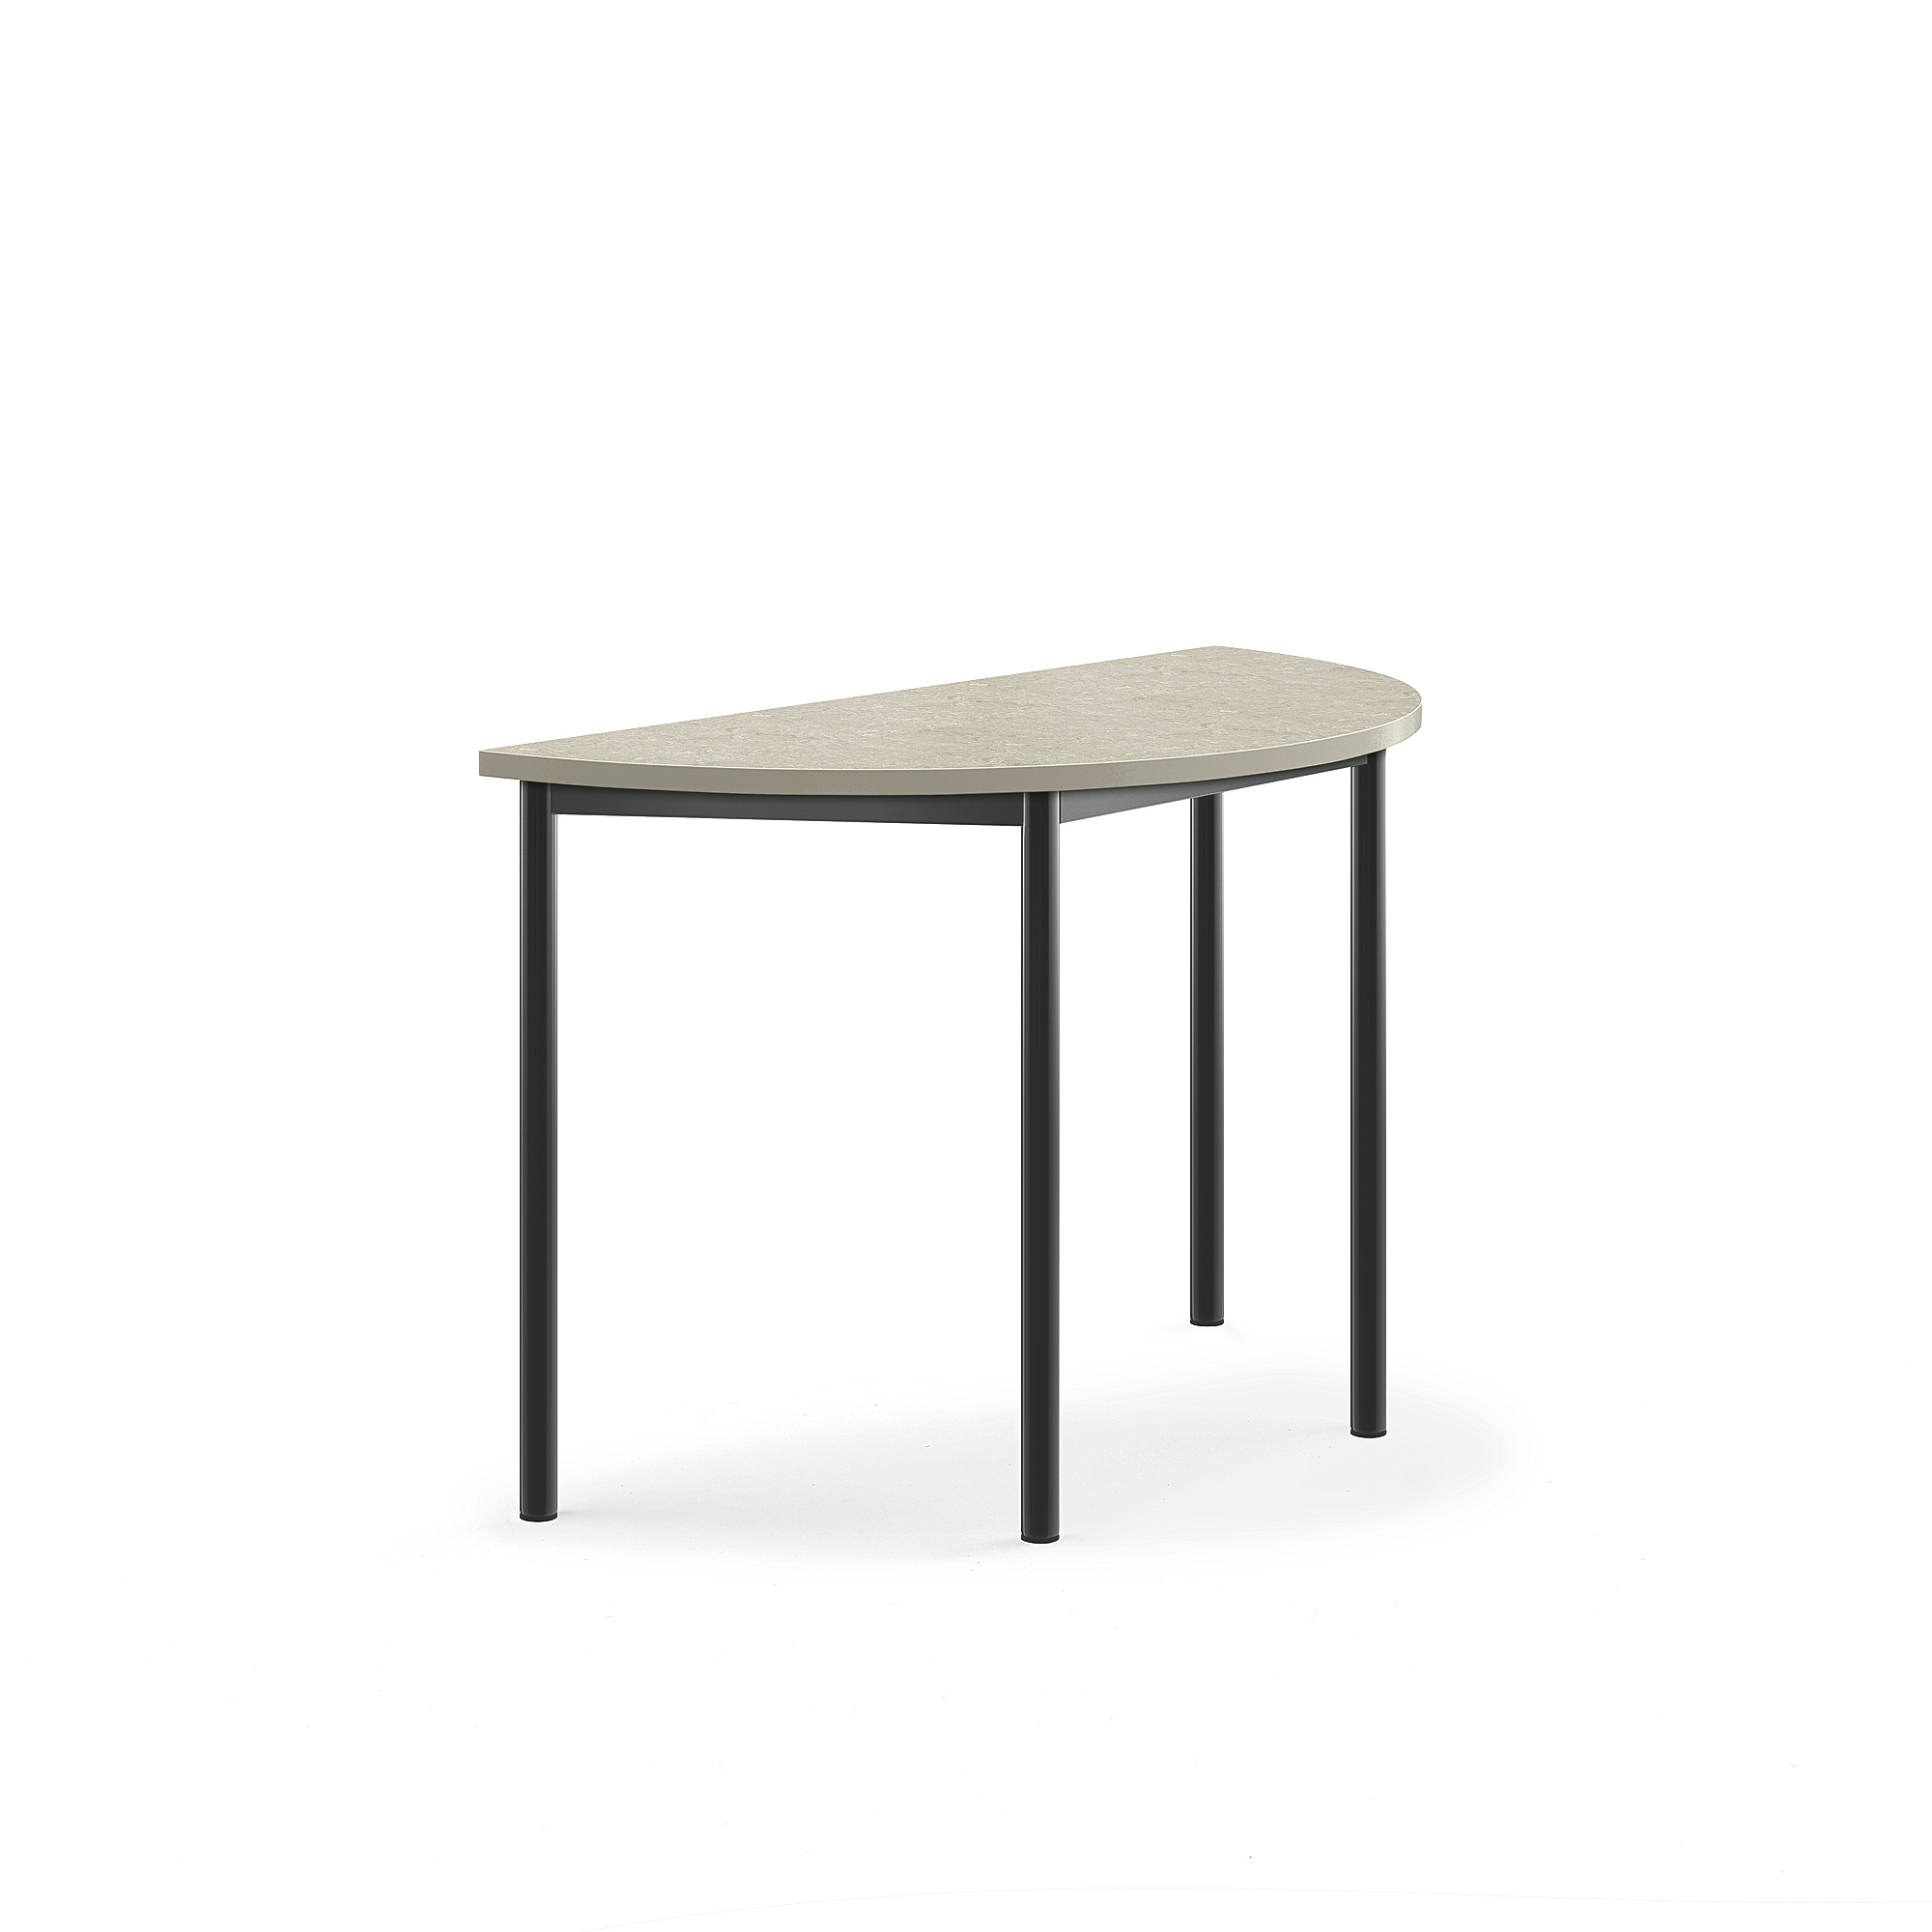 Stůl SONITUS, půlkruh, 1200x600x760 mm, antracitově šedé nohy, deska s linoleem, šedá